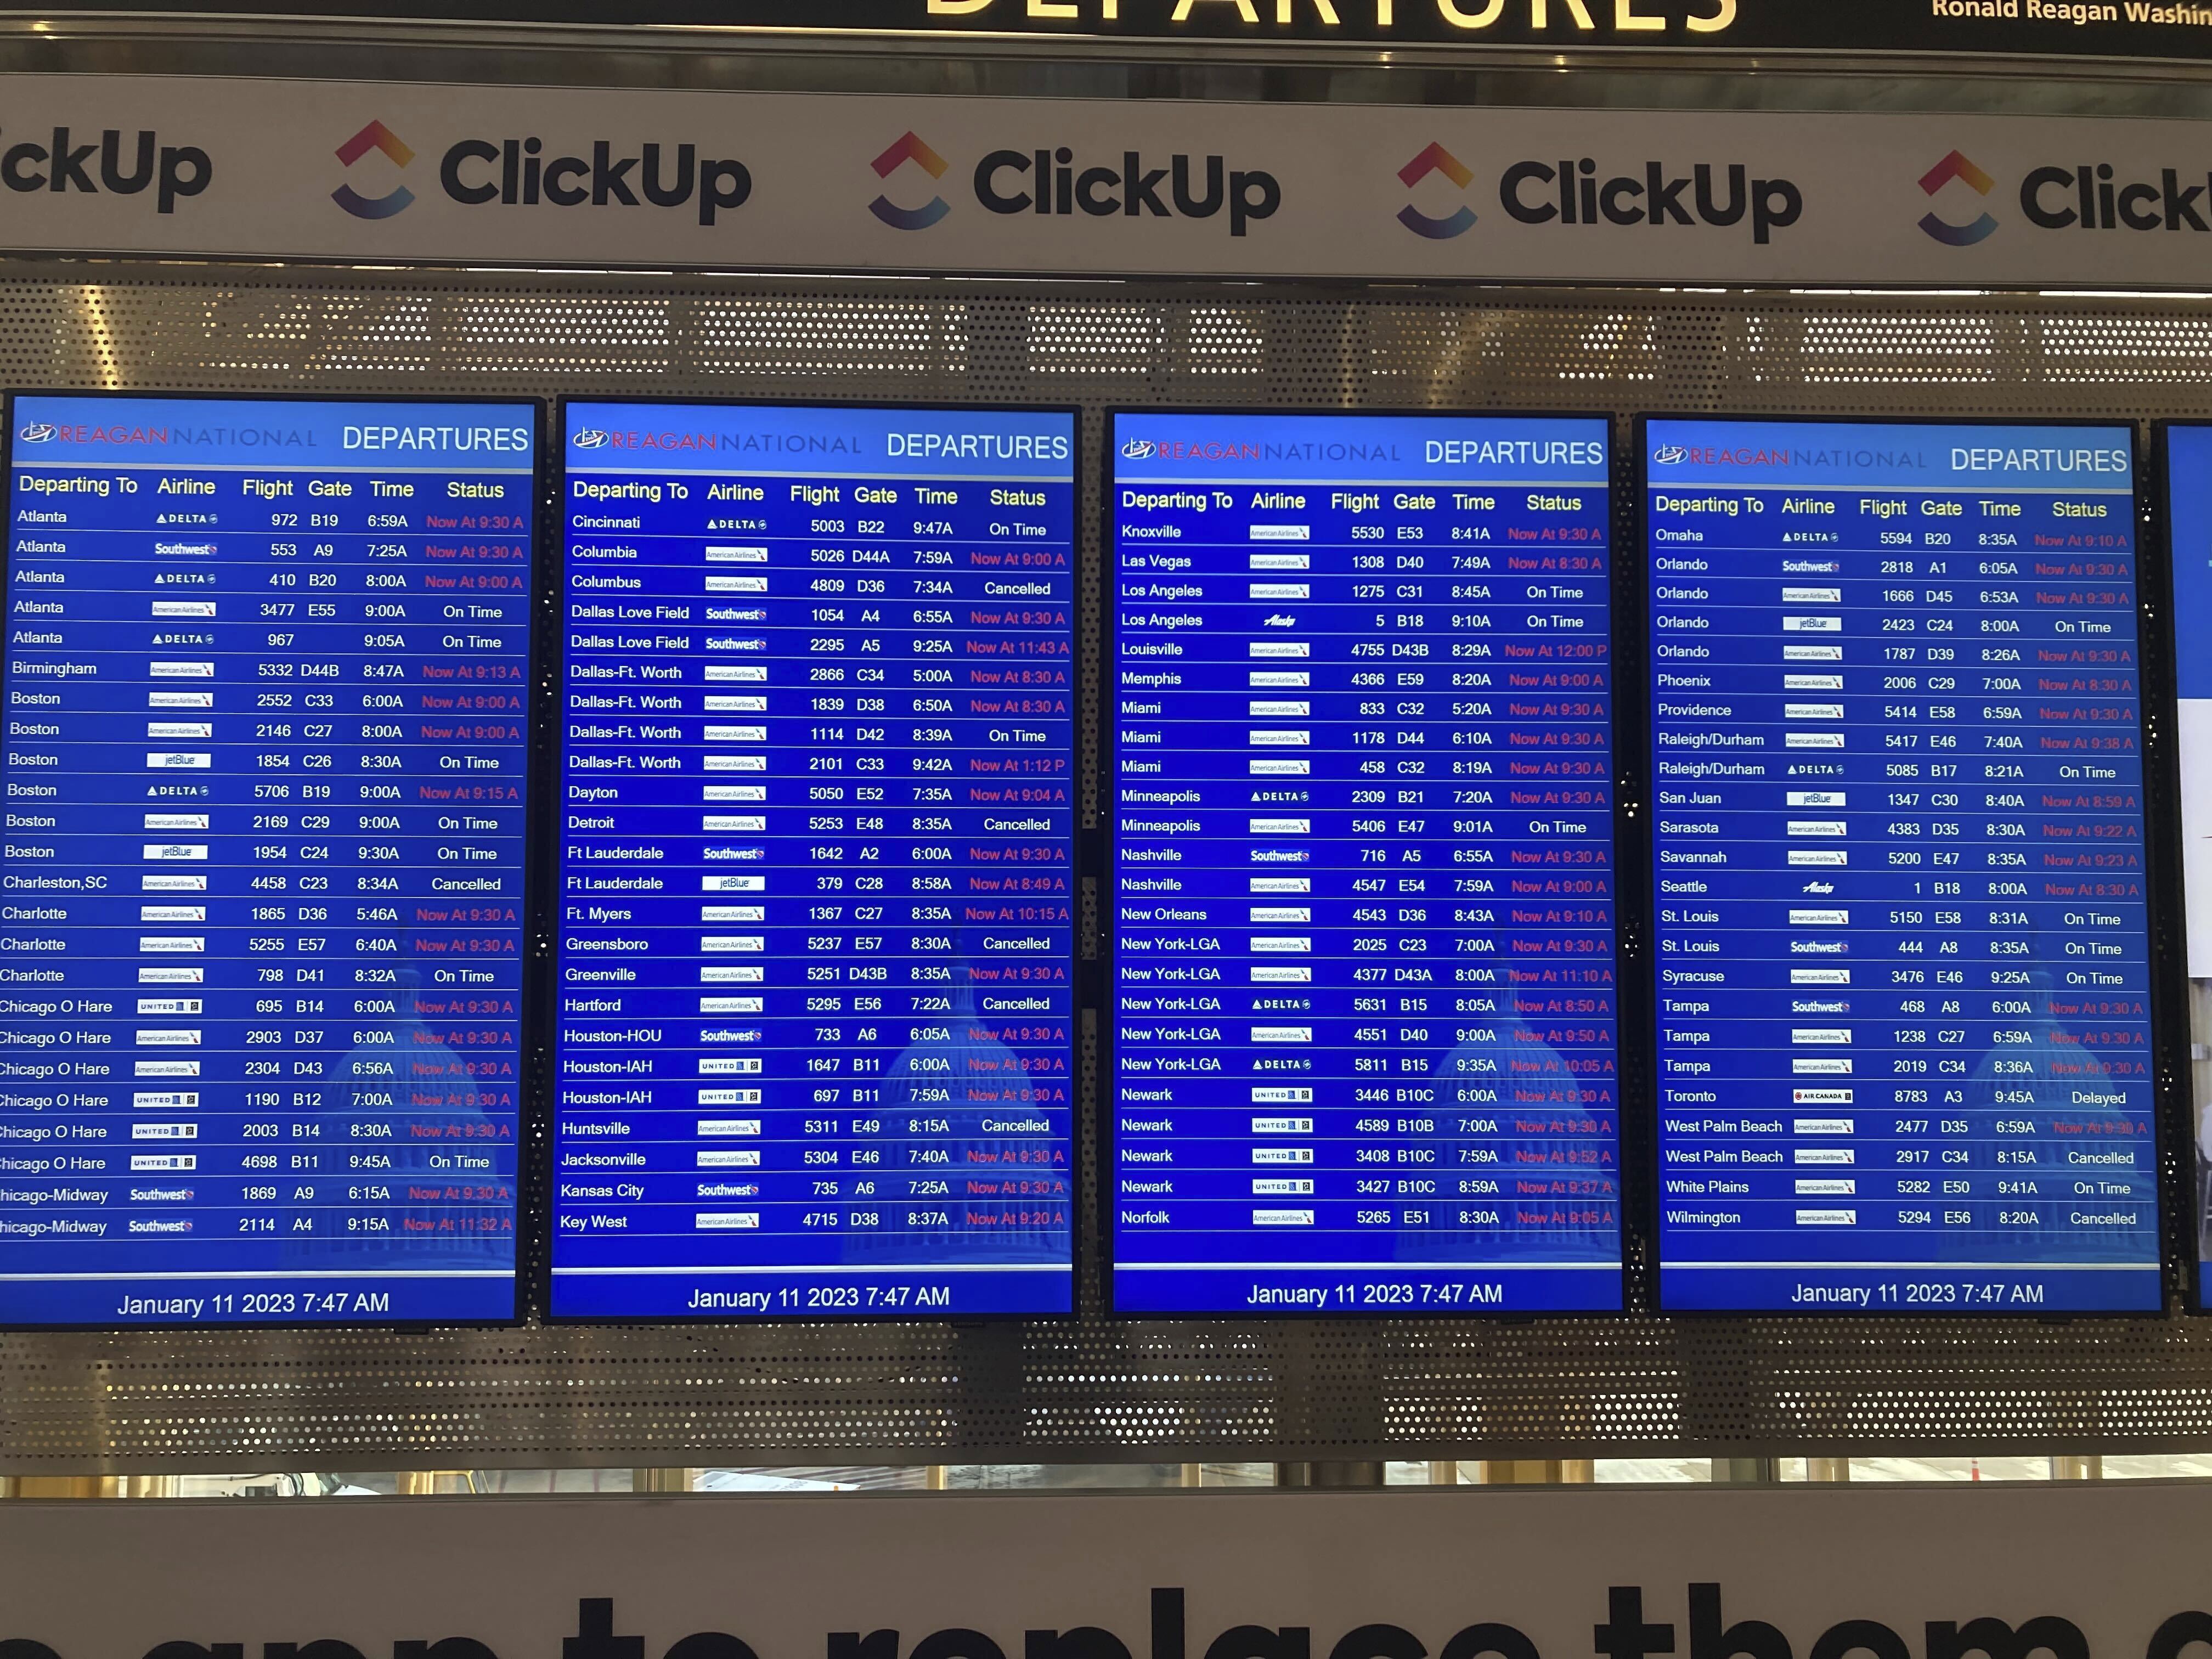 A message board shows departures at Ronald Reagan Washington National Airport in Arlington, Va., on Wednesday, Jan. 11. 2023.  